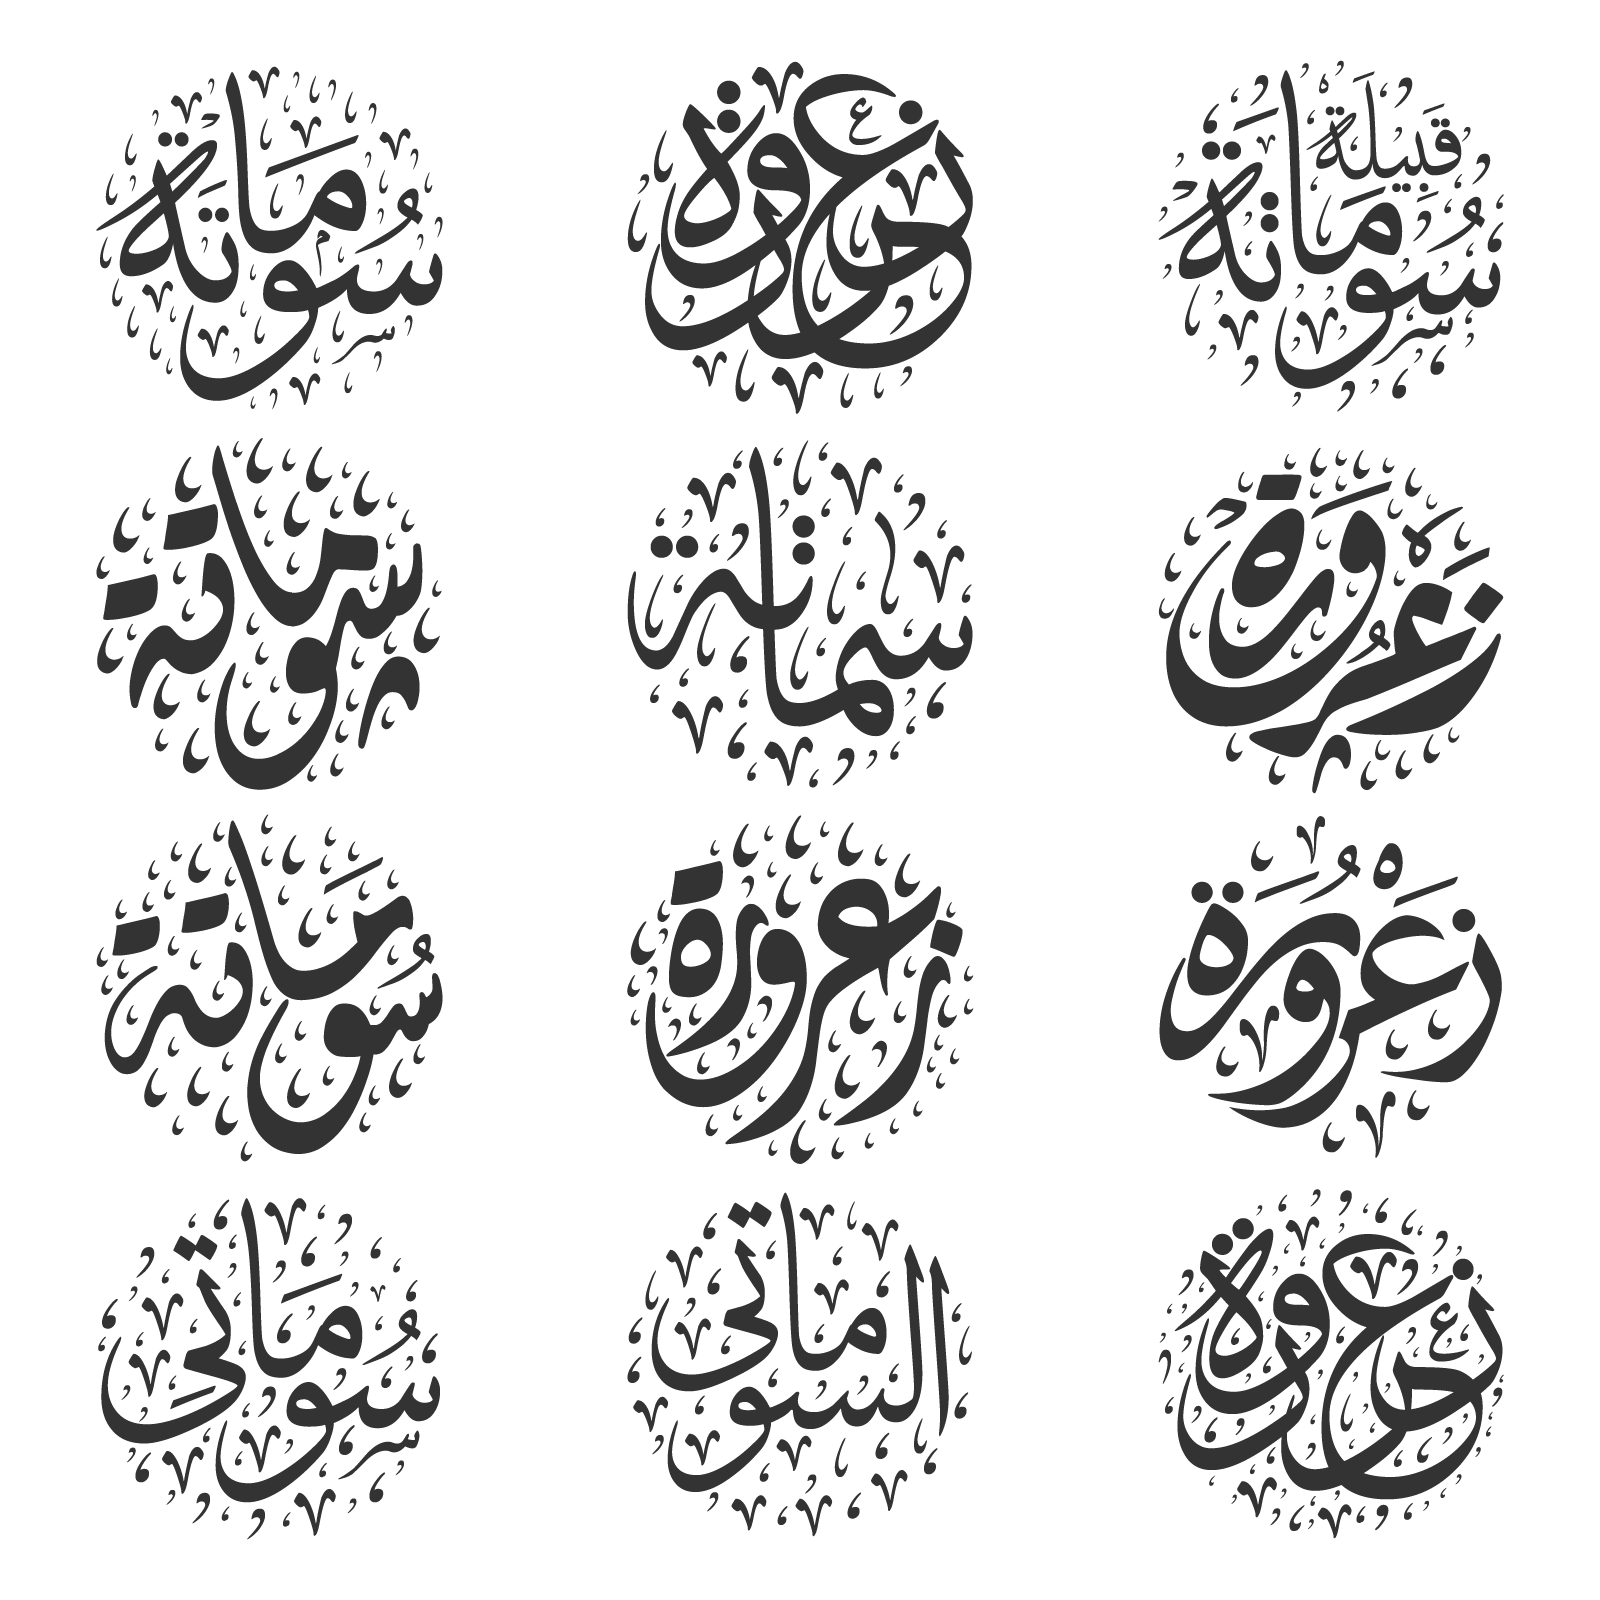 zaarora somata larache scripts vector svg eps psd ai pdf png  download #larache #morocco #arab #arabic #islam #maroc #fonts #vector #zaarora #tanger